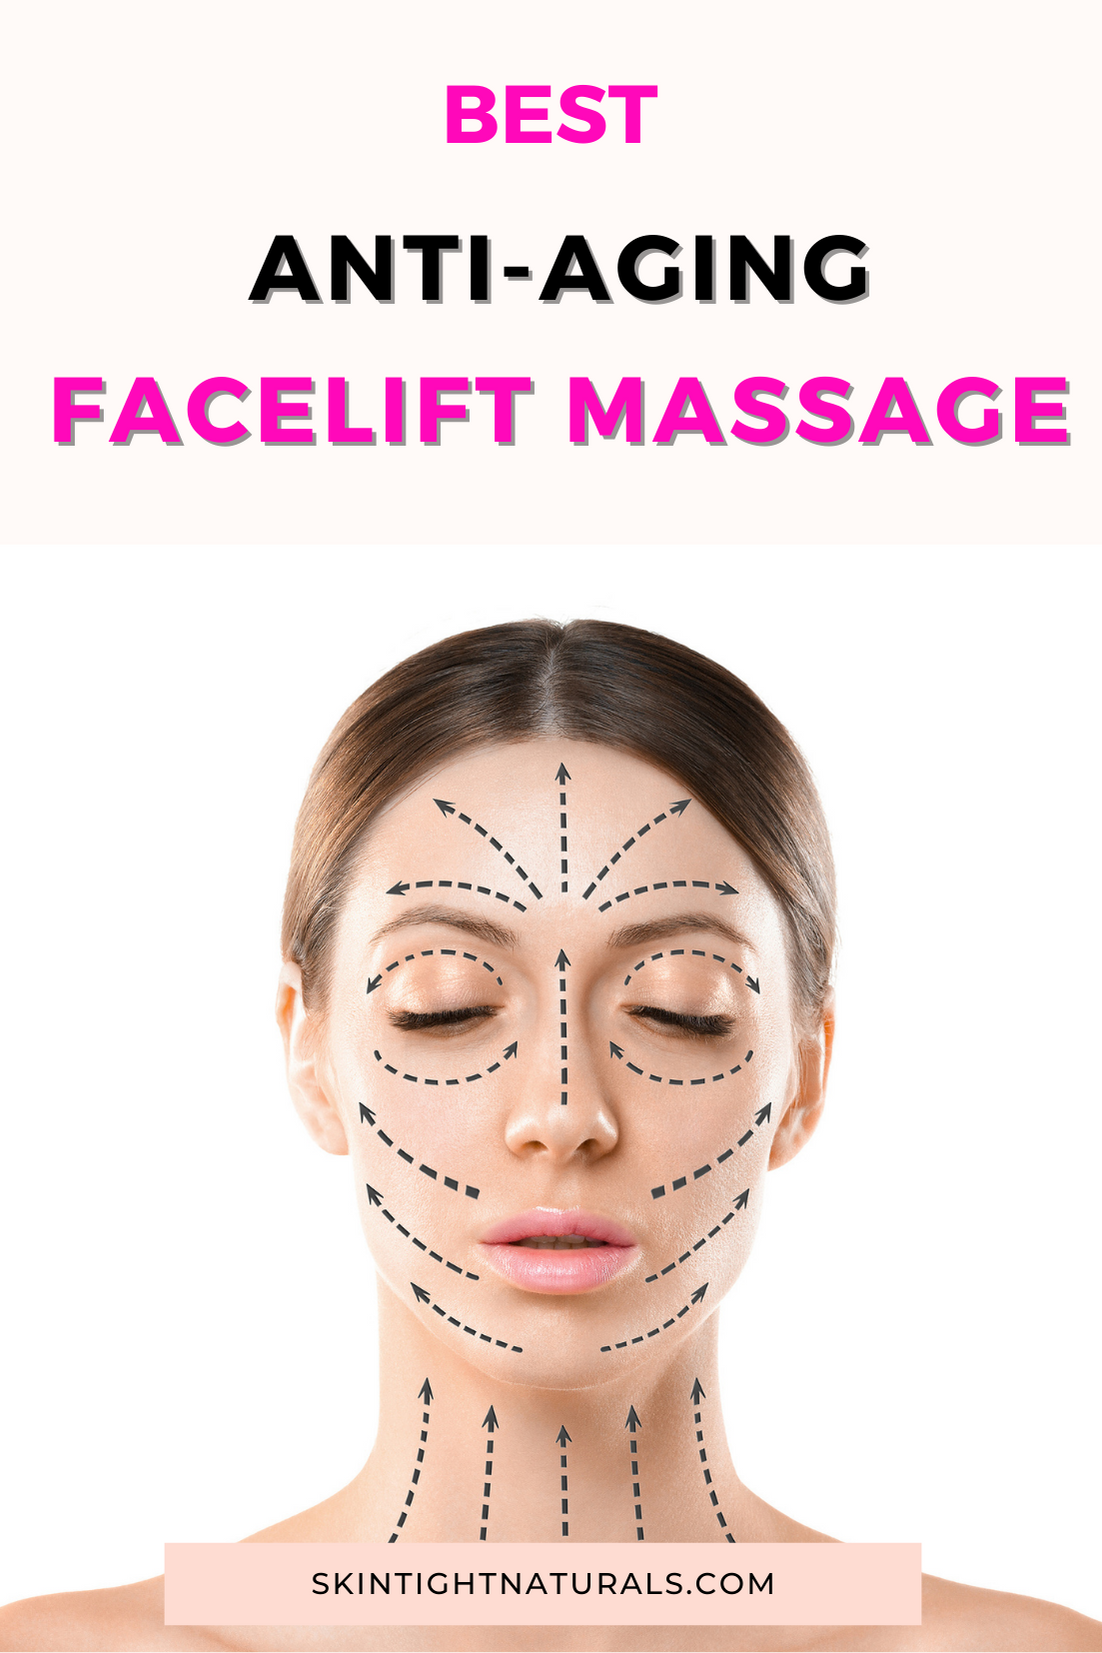 Anti-Aging Facelift Massage